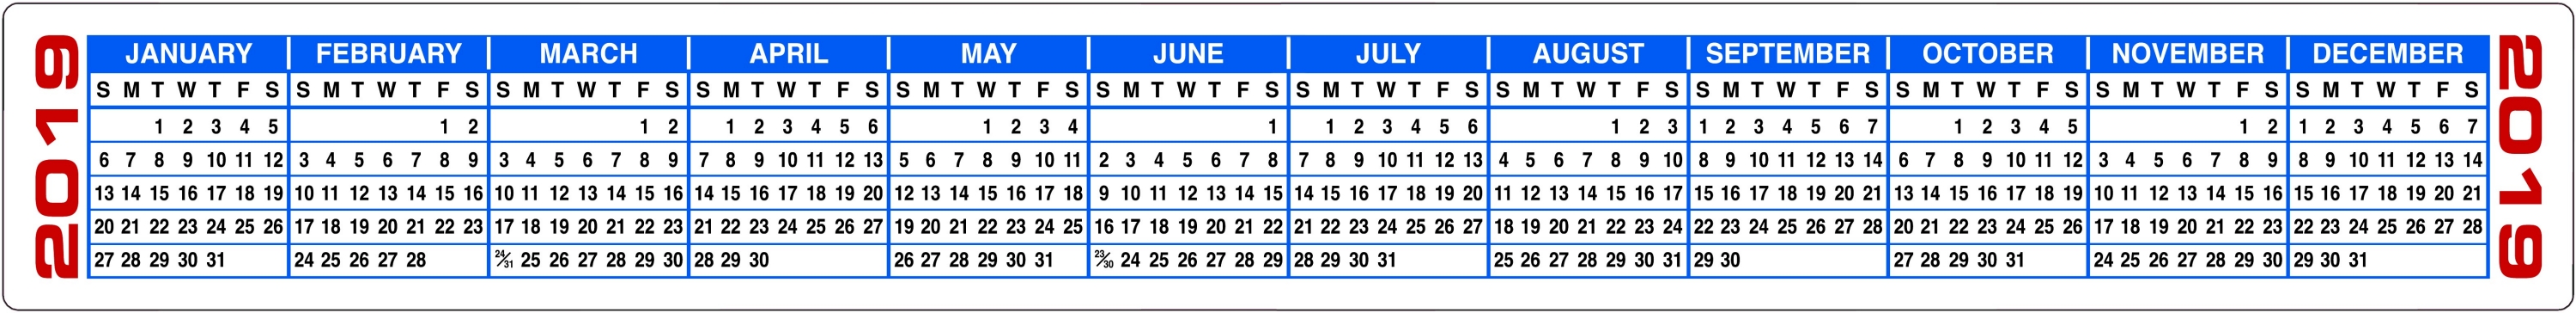 Free Printable 2020 Calendars &amp; 2020 Calendar Strips